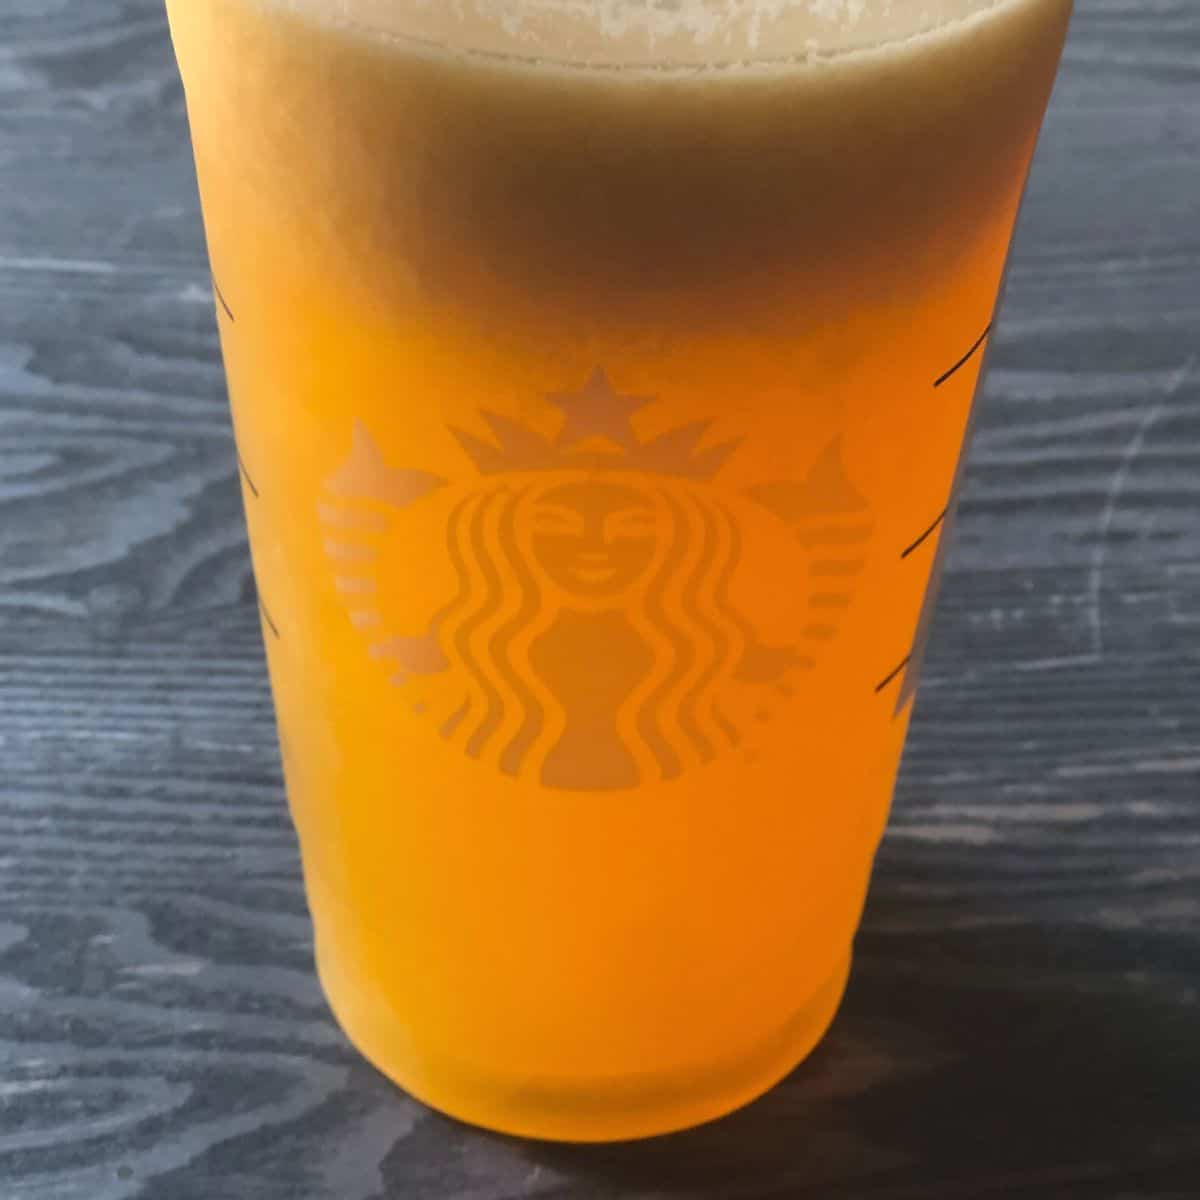 A dark yellow Starbucks cold drink